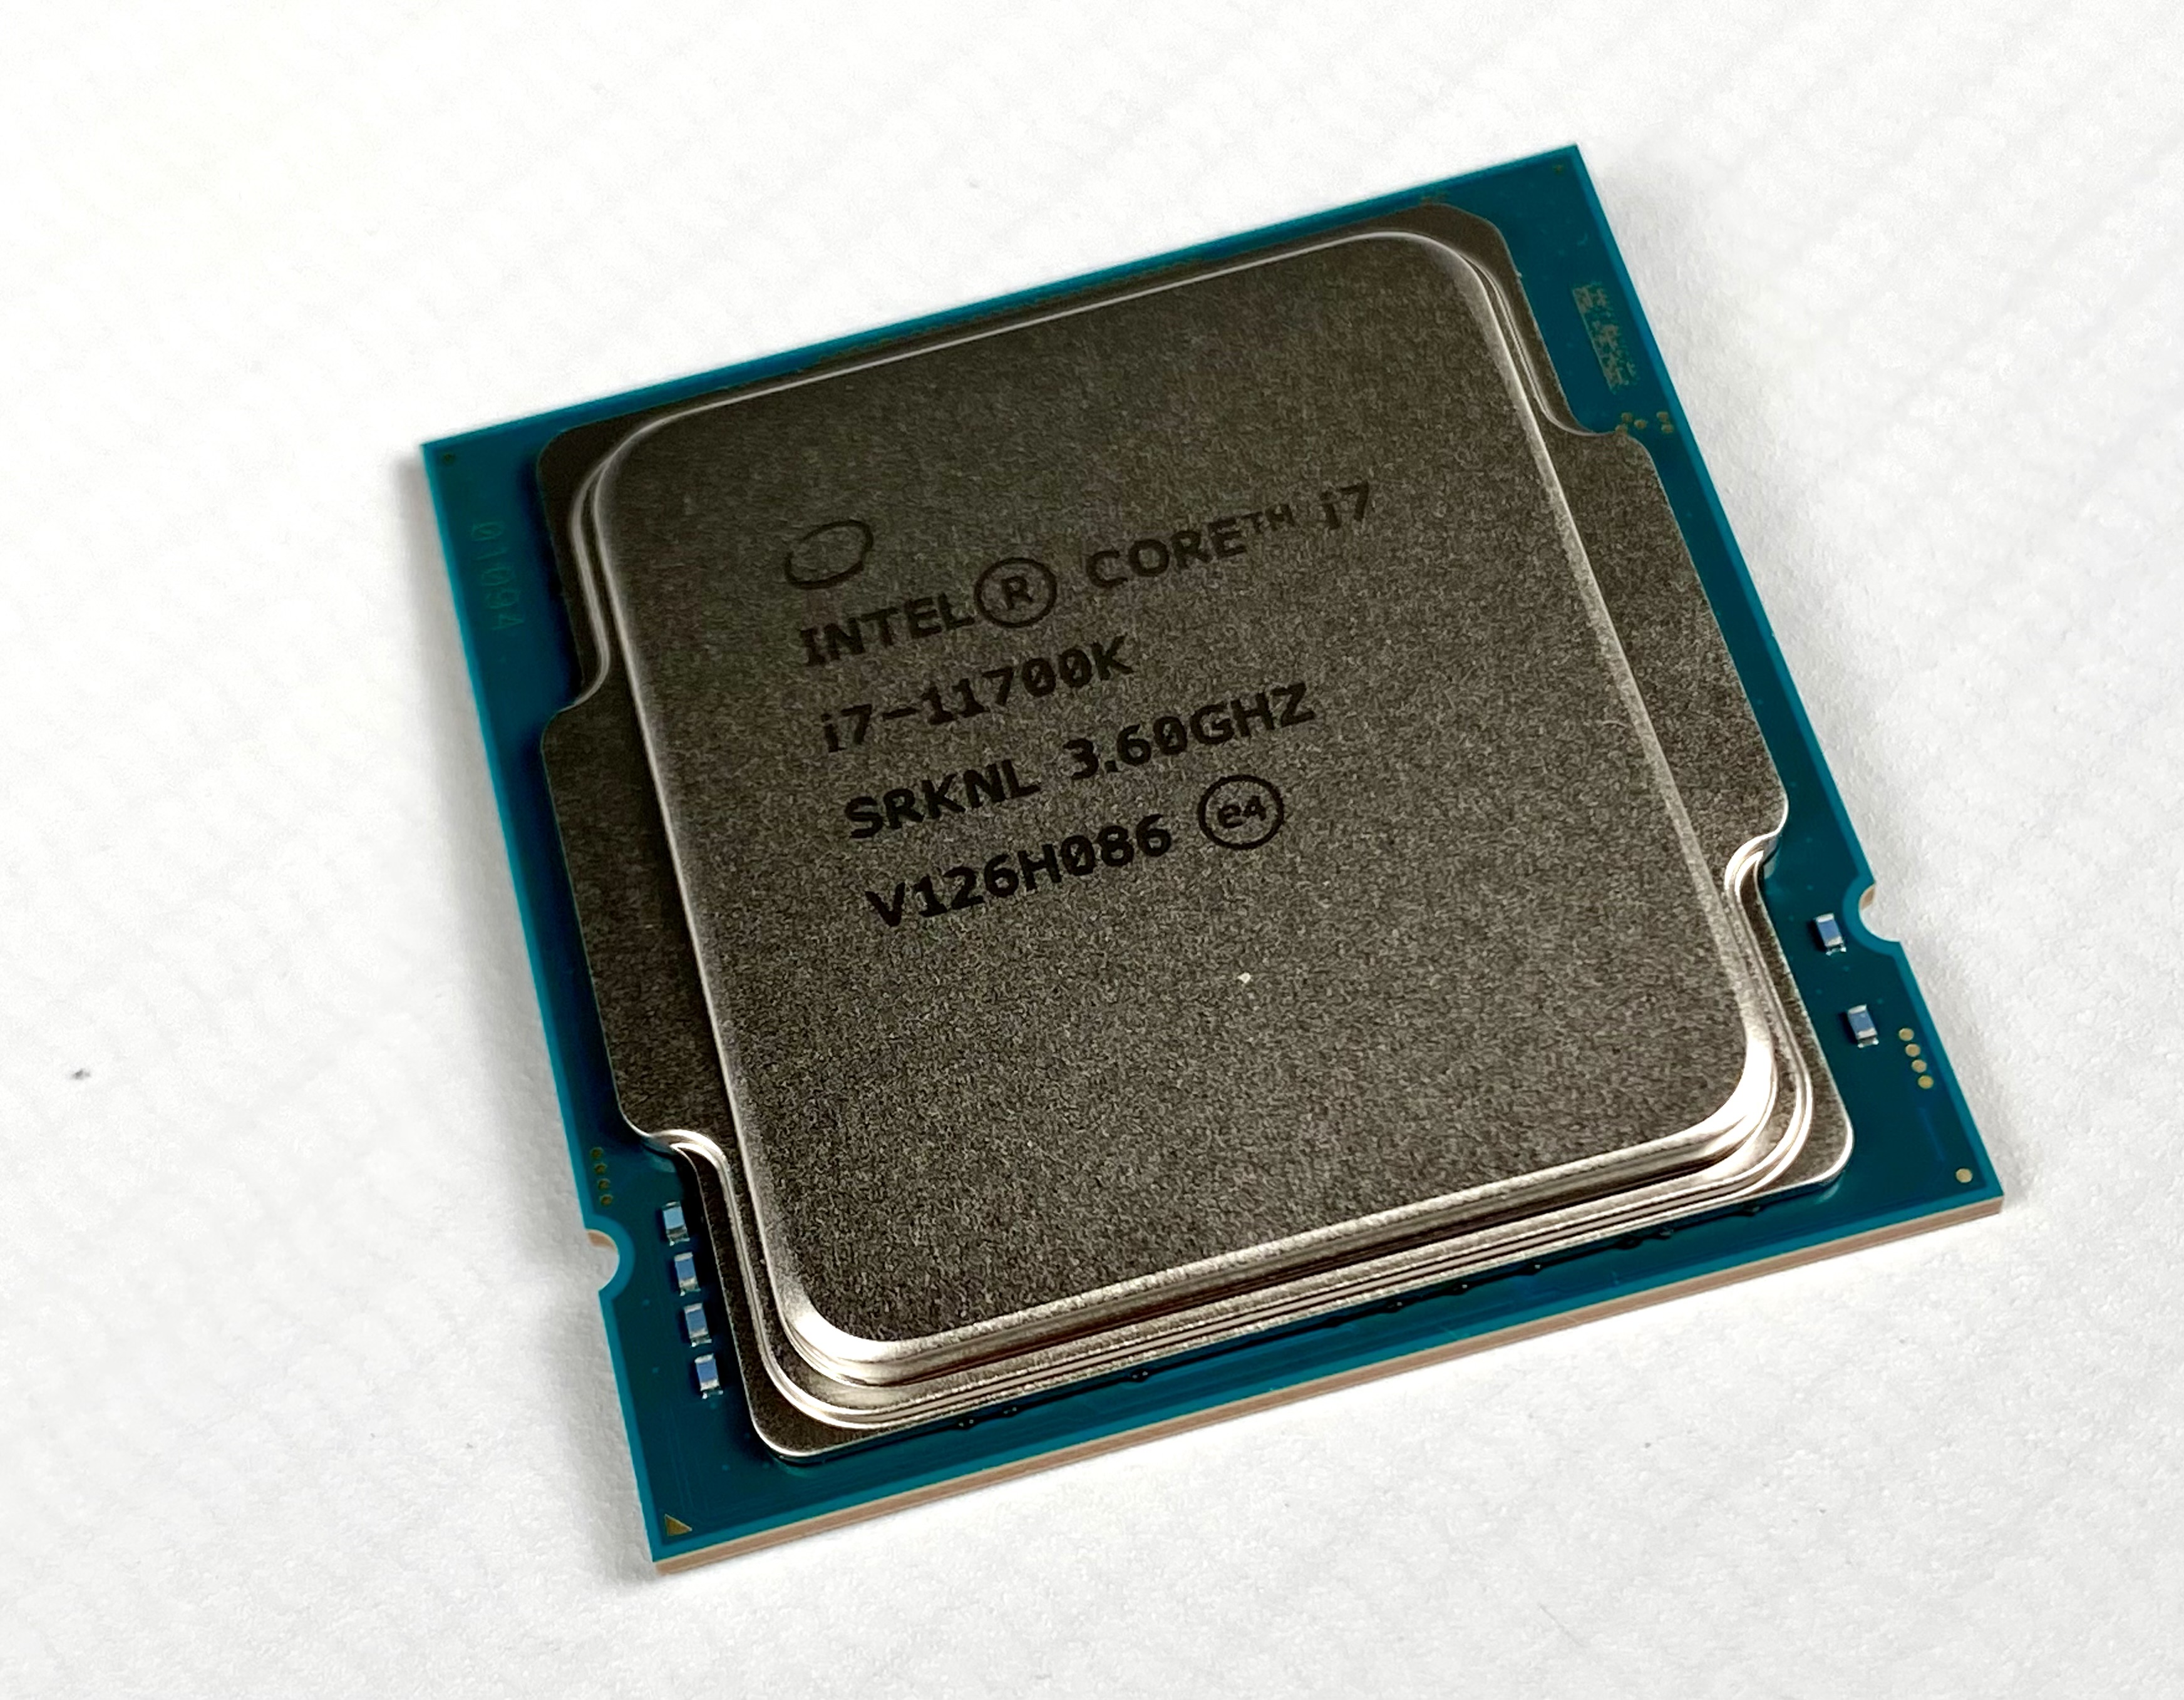 Intel Core I7 k Processor Benchmarks And Specs Notebookcheck Net Tech